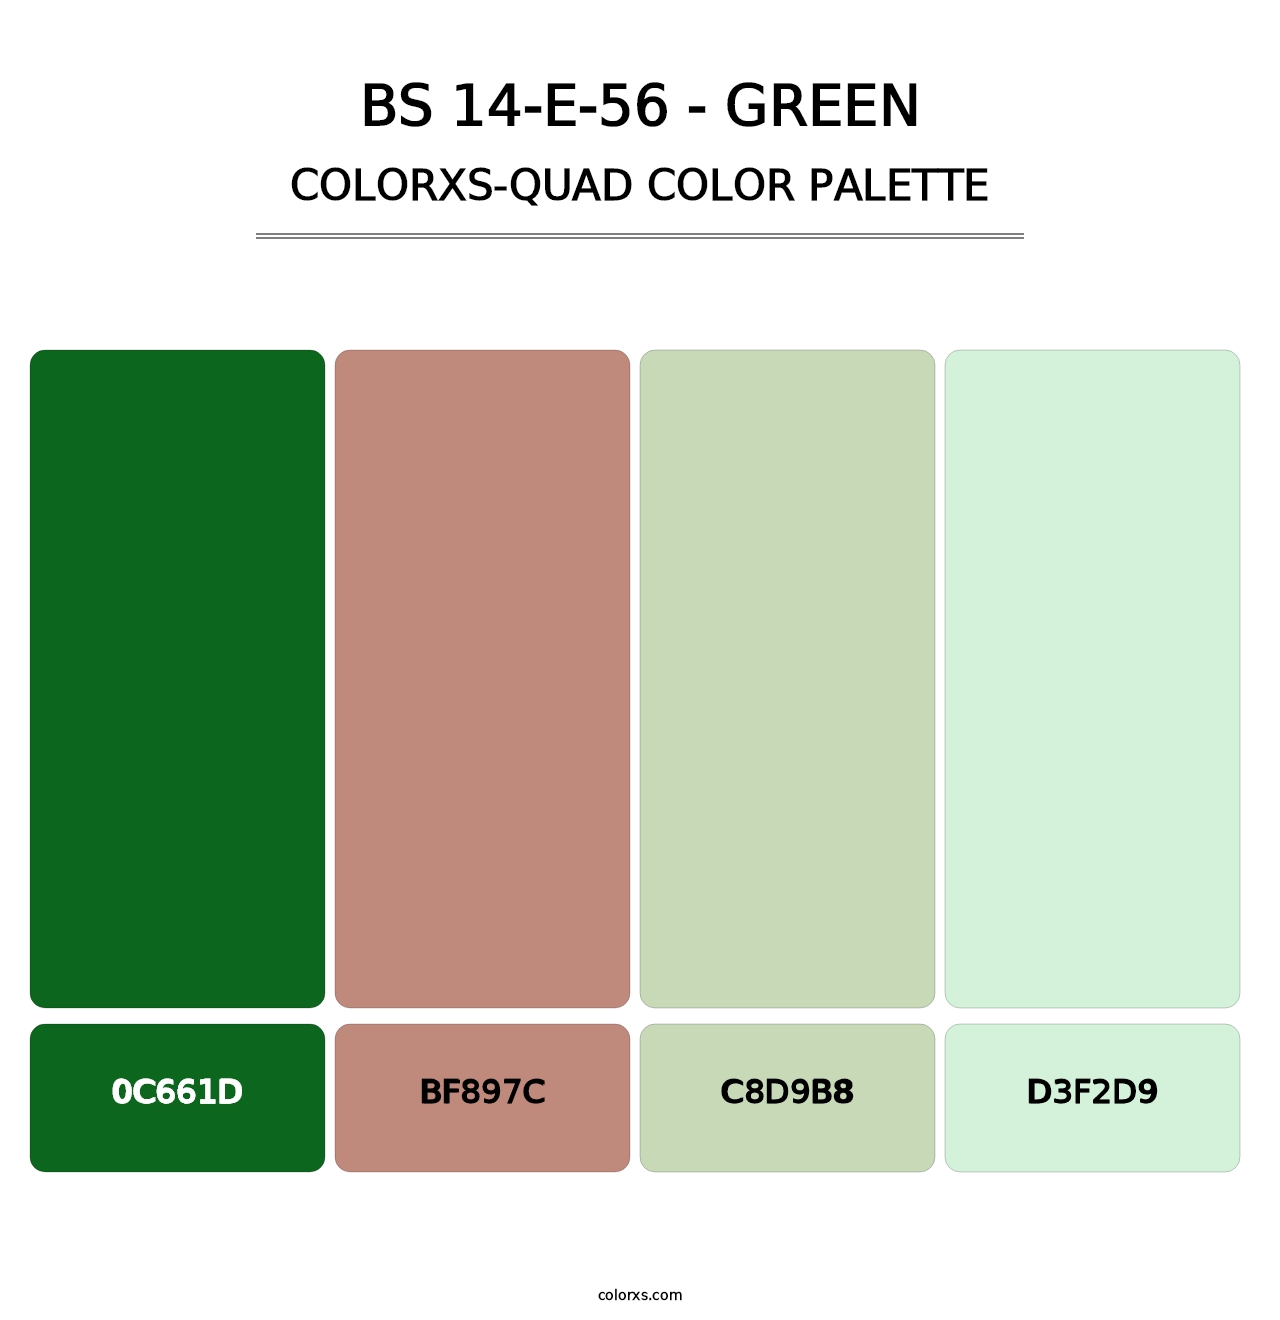 BS 14-E-56 - Green - Colorxs Quad Palette